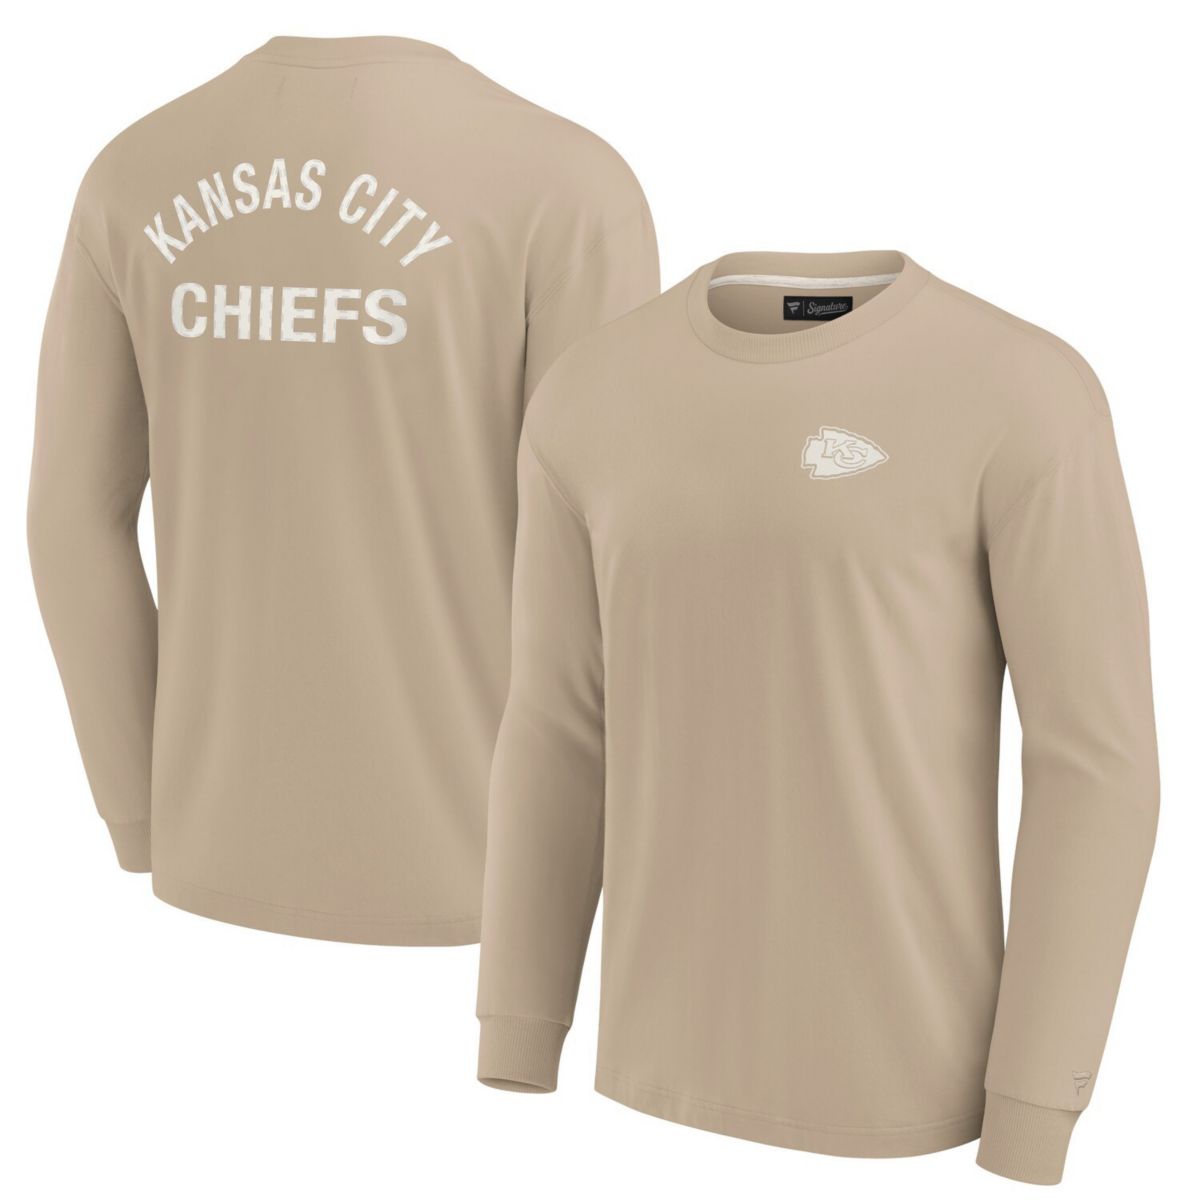 Unisex Fanatics Signature Khaki Kansas City Chiefs Elements Super Soft Long Sleeve T-Shirt Fanatics Signature